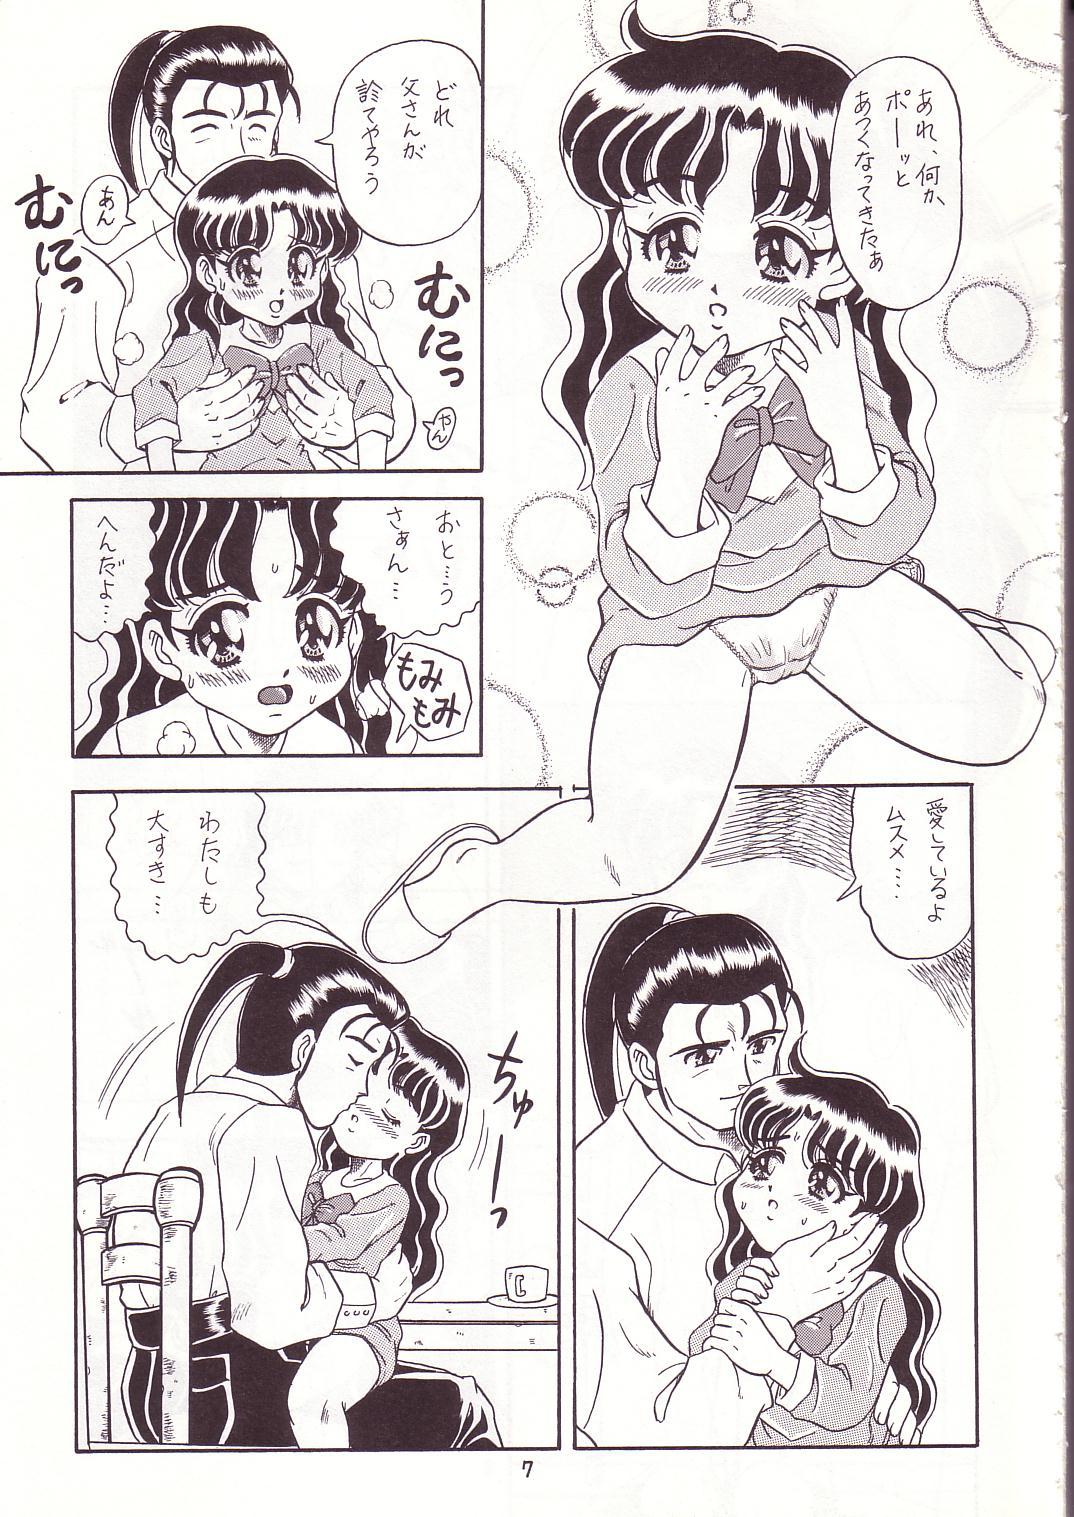 Casado Lolikko LOVE 7 - Sakura taisen Martian successor nadesico Gaogaigar Minky momo Nurse angel ririka sos Wingman Prostitute - Page 6